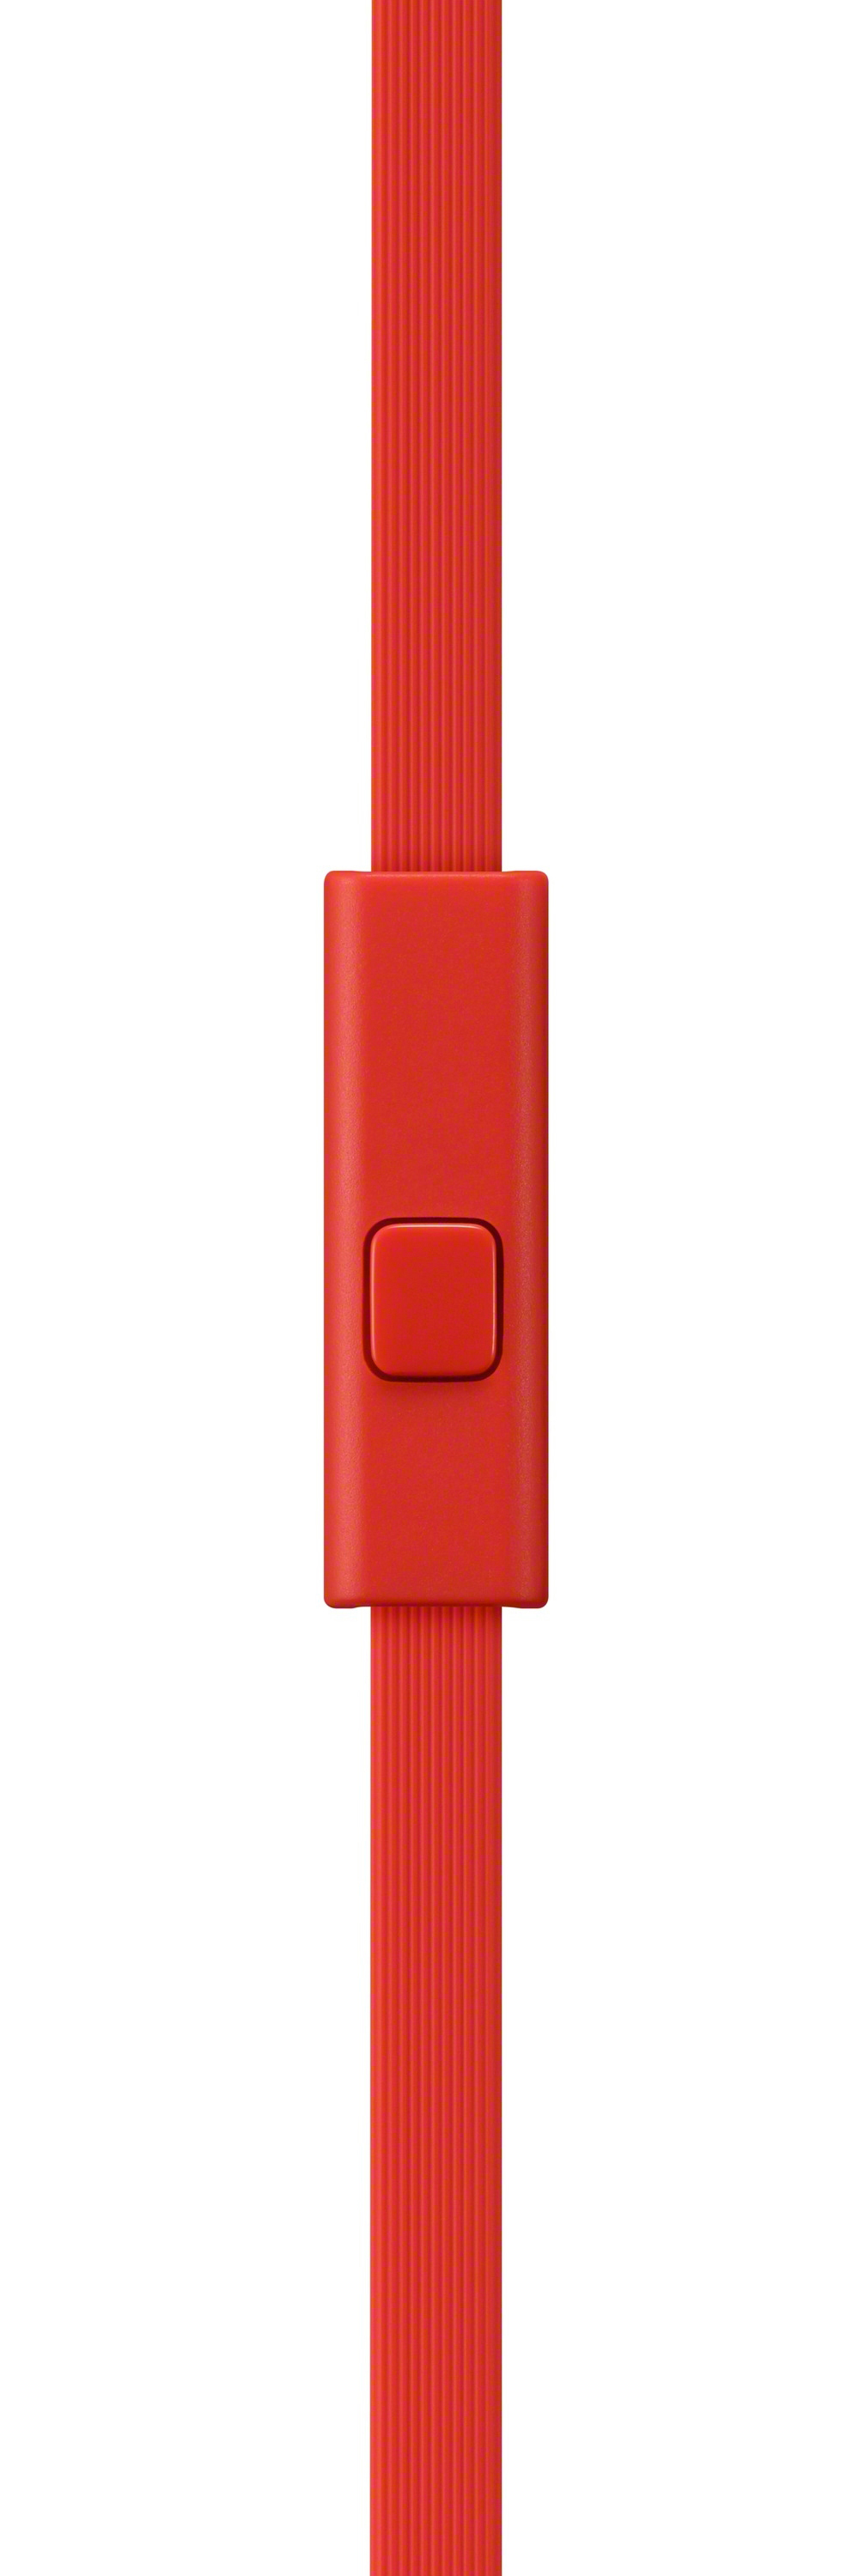 SONY MDR-XB550AP, On-ear Kopfhörer Rot